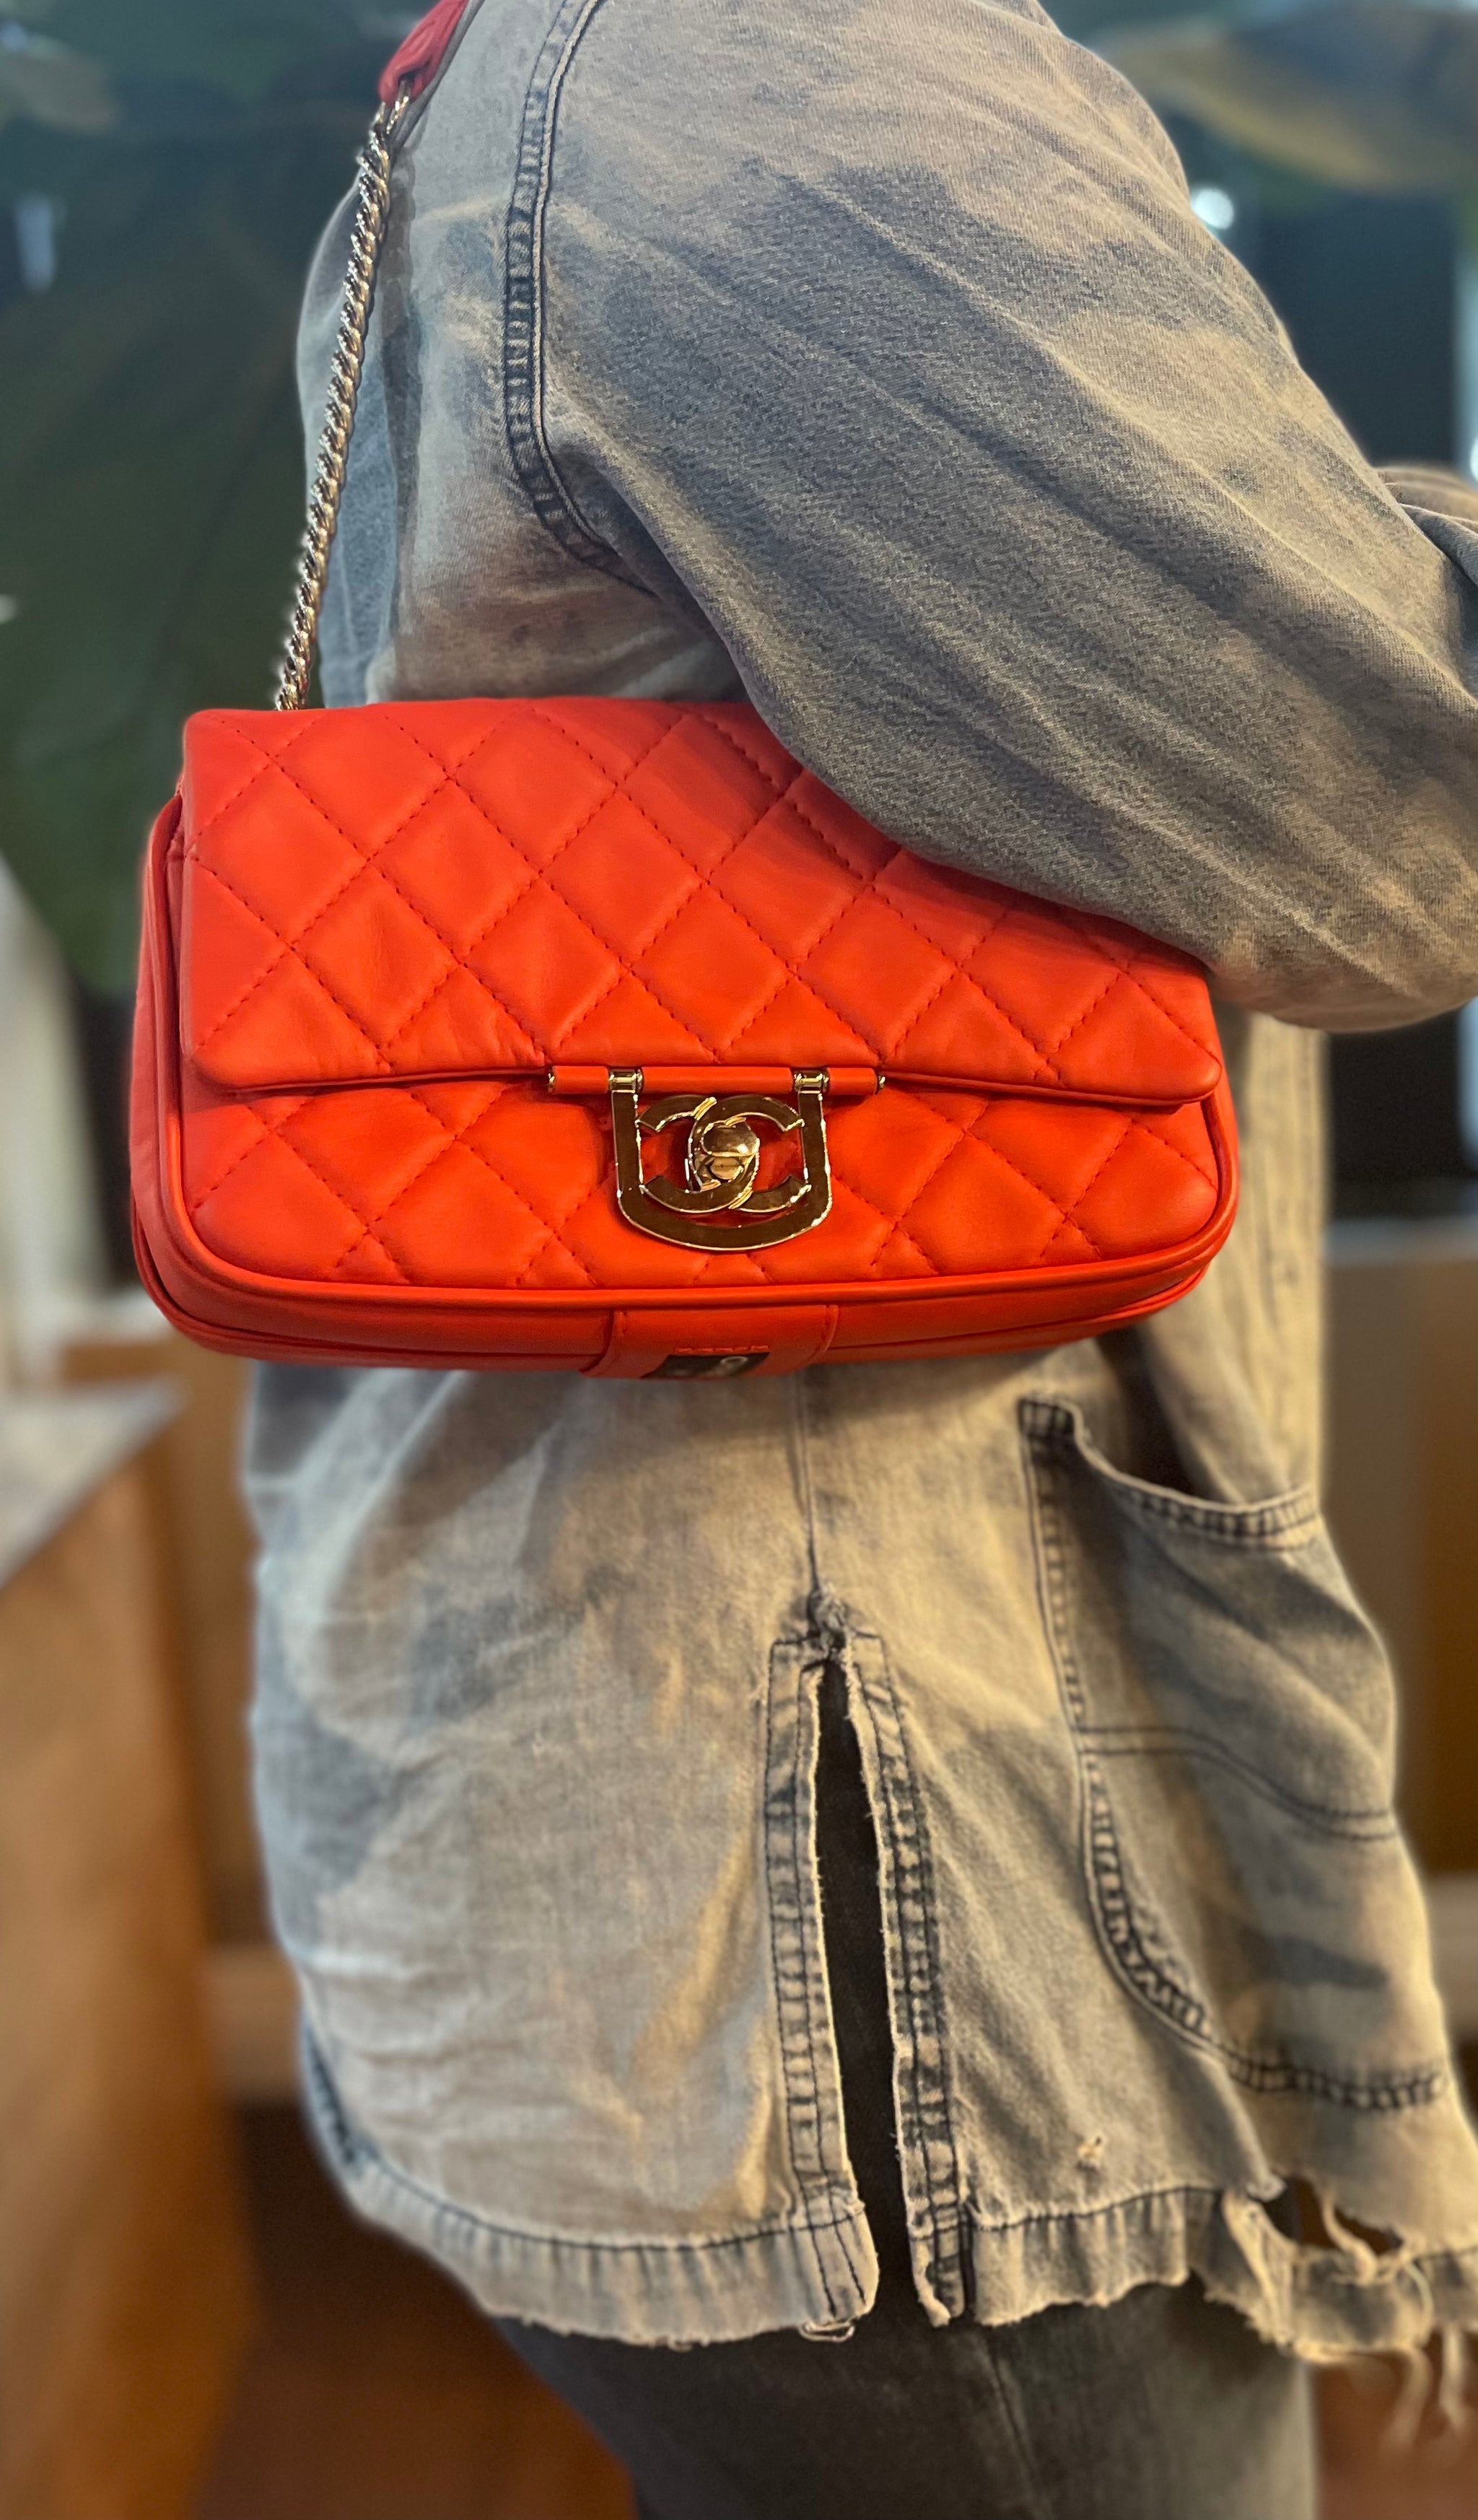 Chanel Red Classic Mini Square Flap Bag